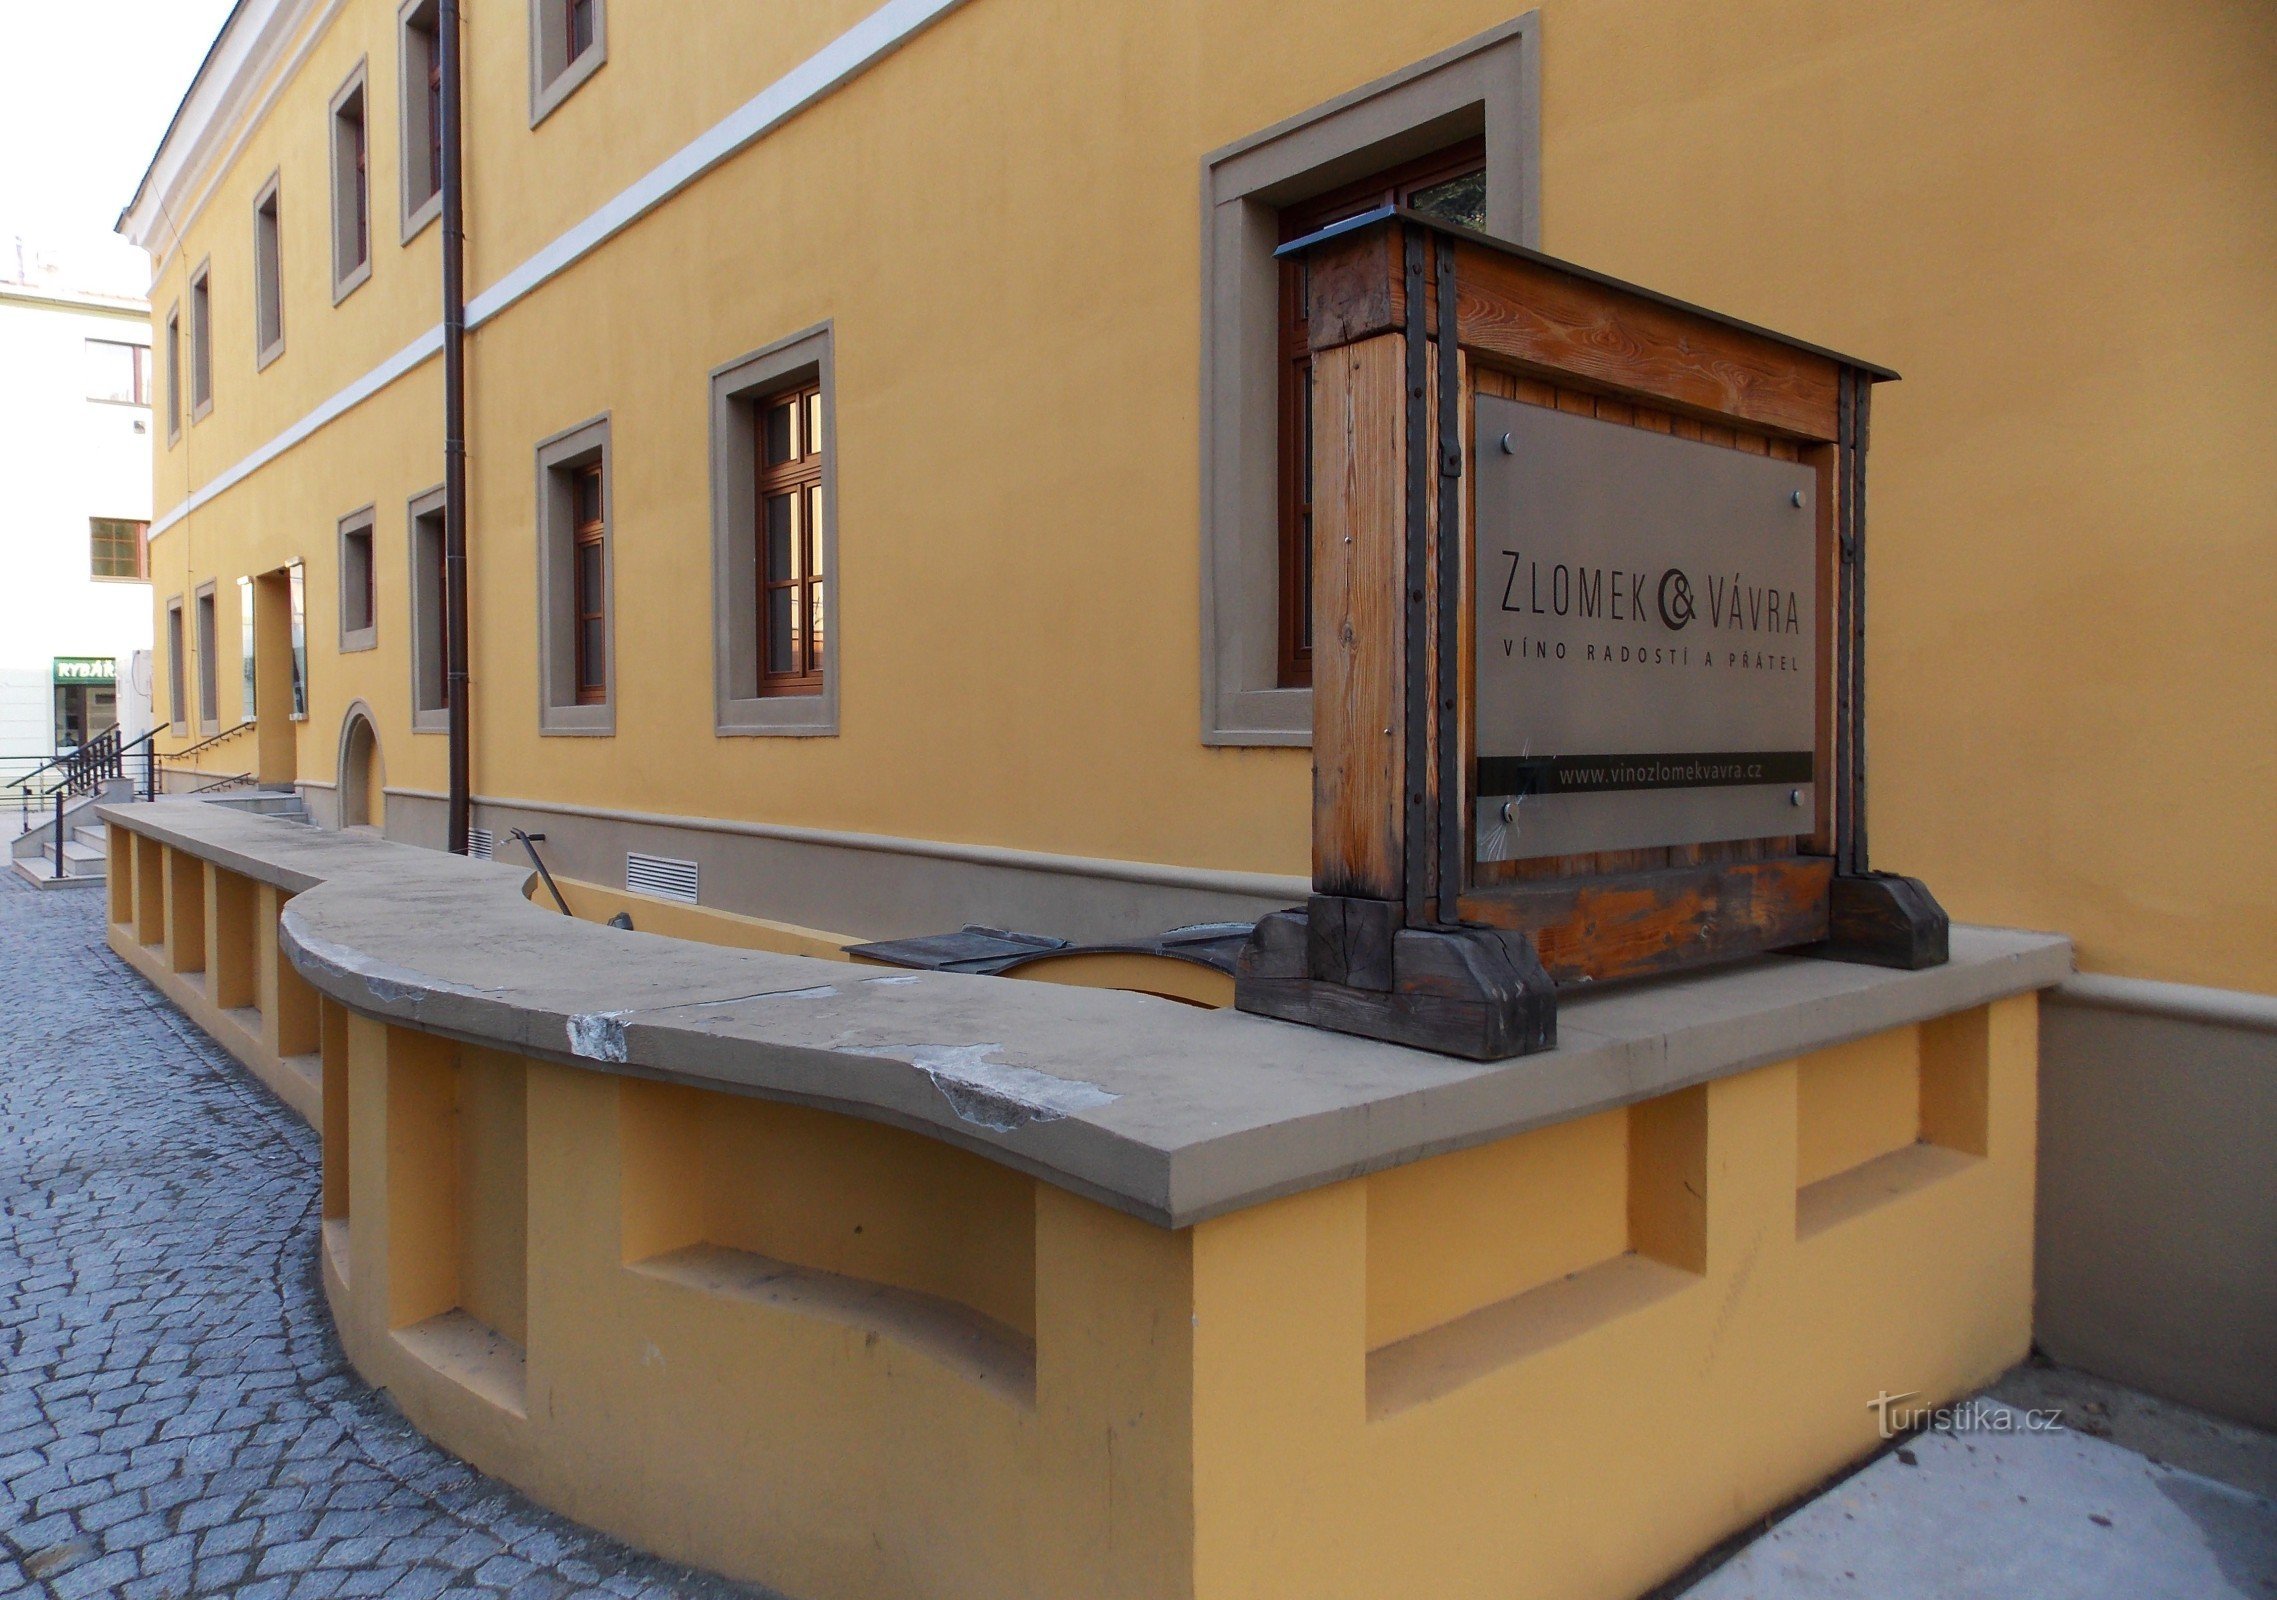 Szlovák borok galériája Uh-ban. Hradišti